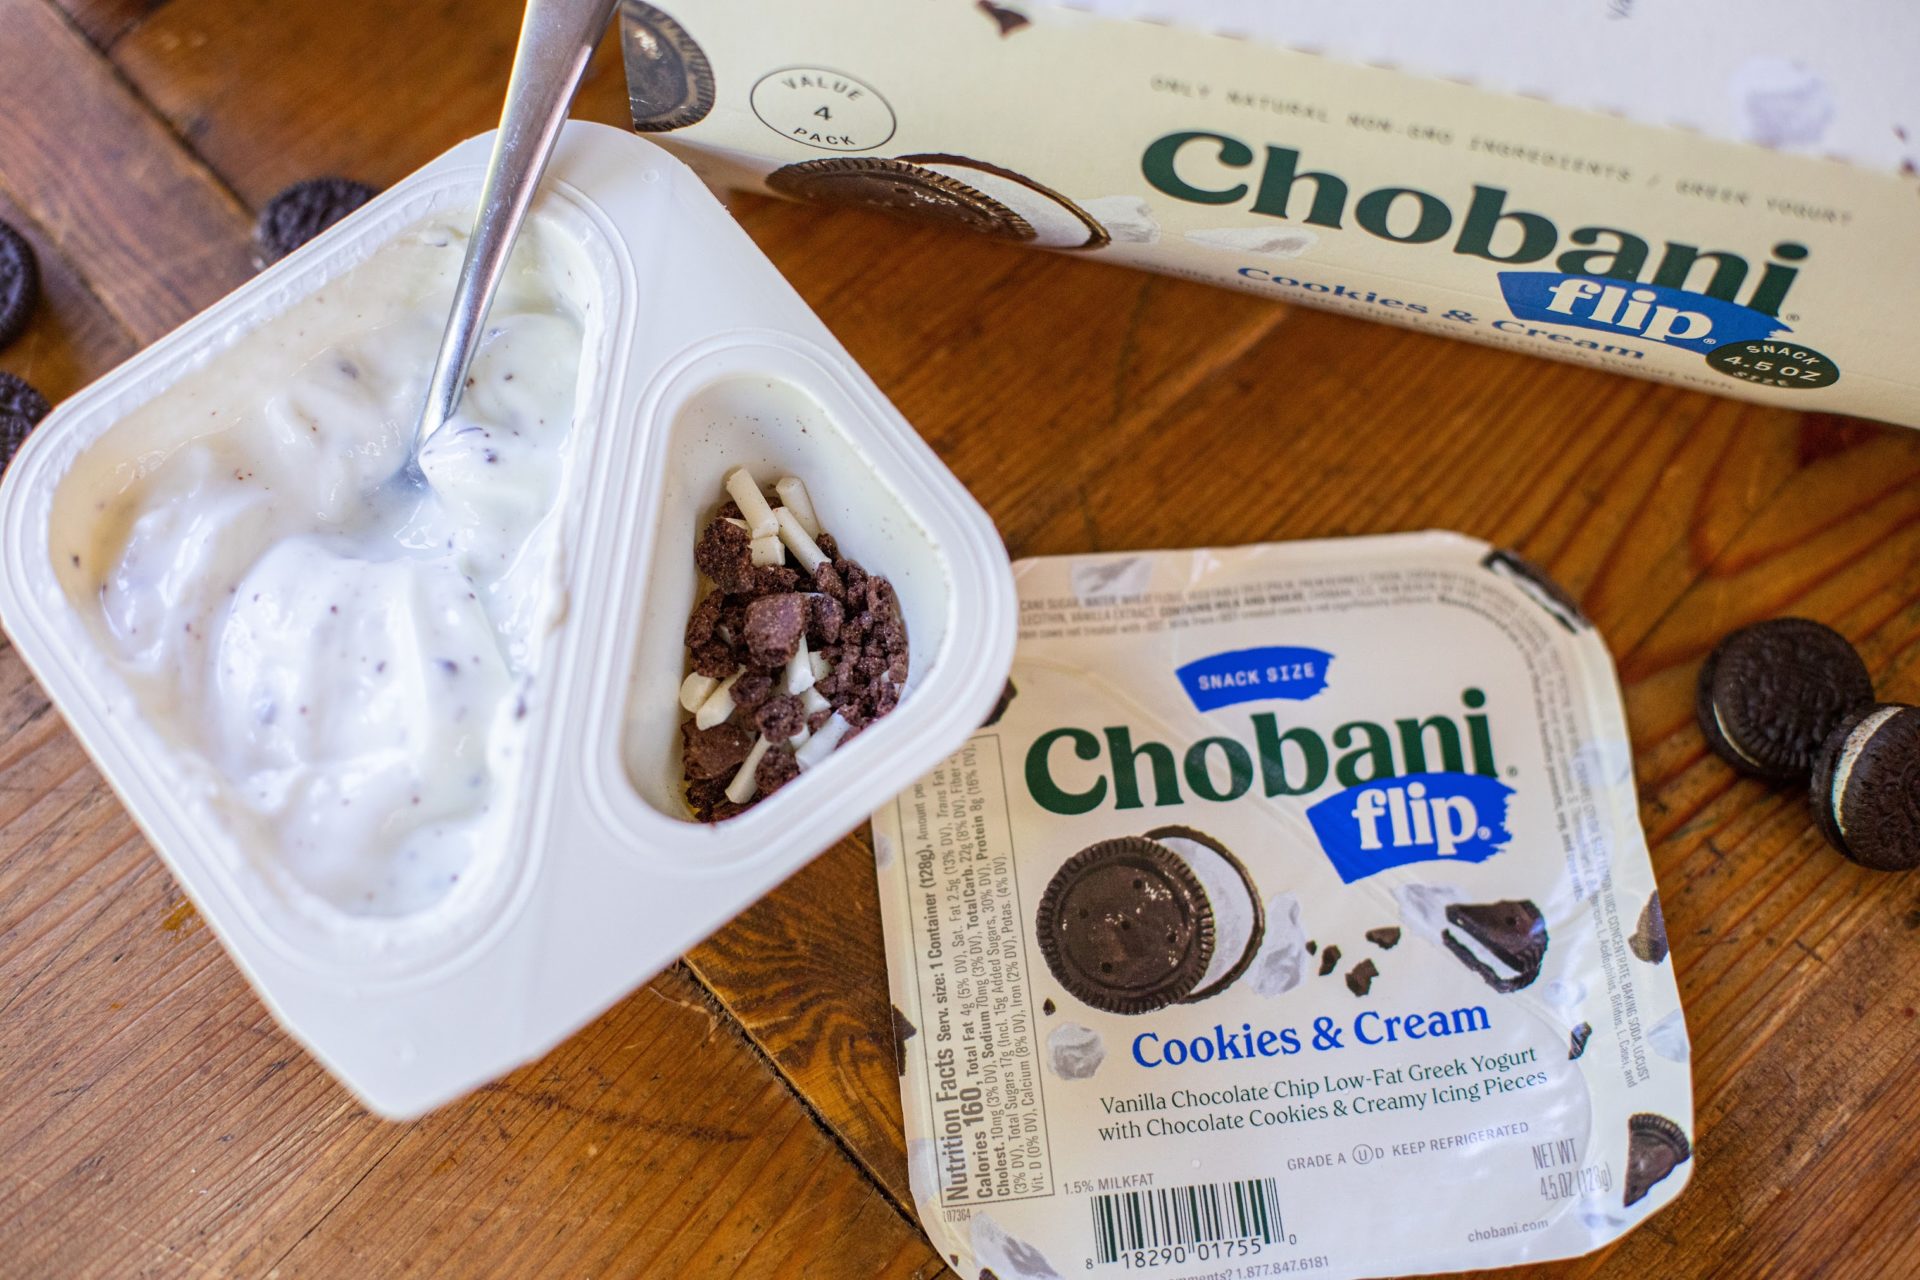 Get Chobani Flip Yogurt For Just 80¢ Per Cup At Publix - iHeartPublix